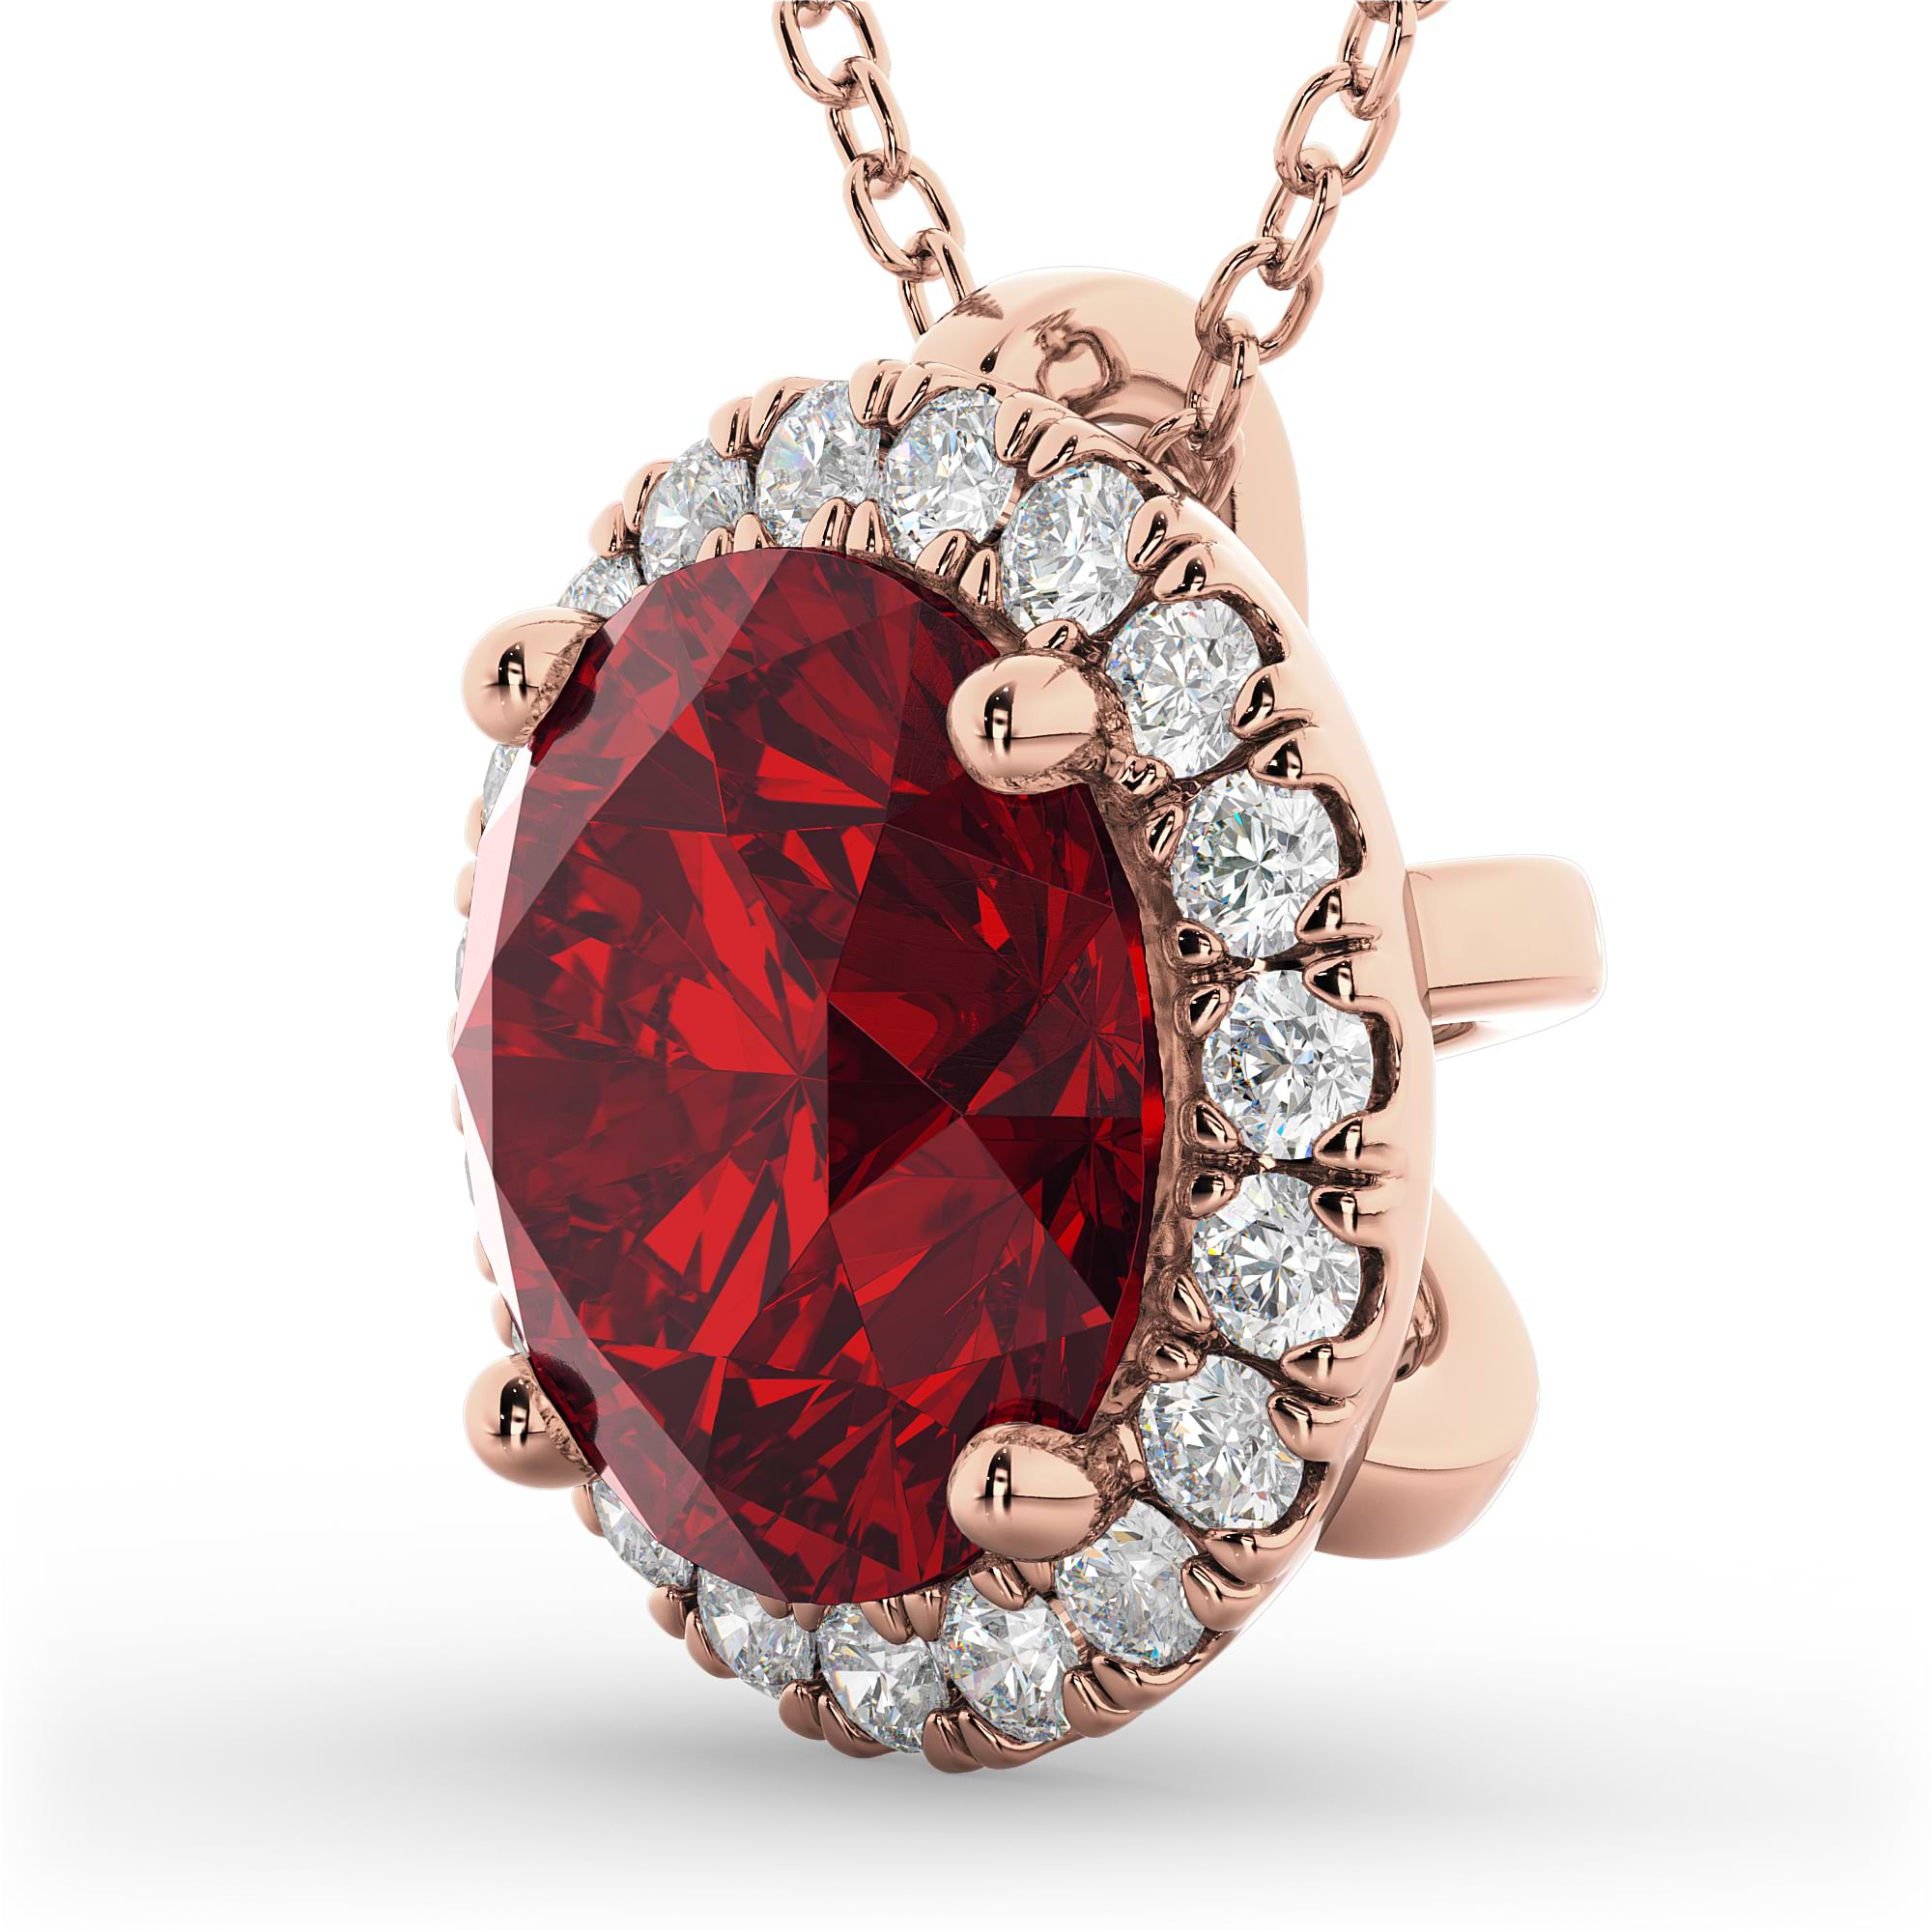 Halo Round Ruby & Diamond Pendant Necklace 14k Rose Gold (2.59ct)